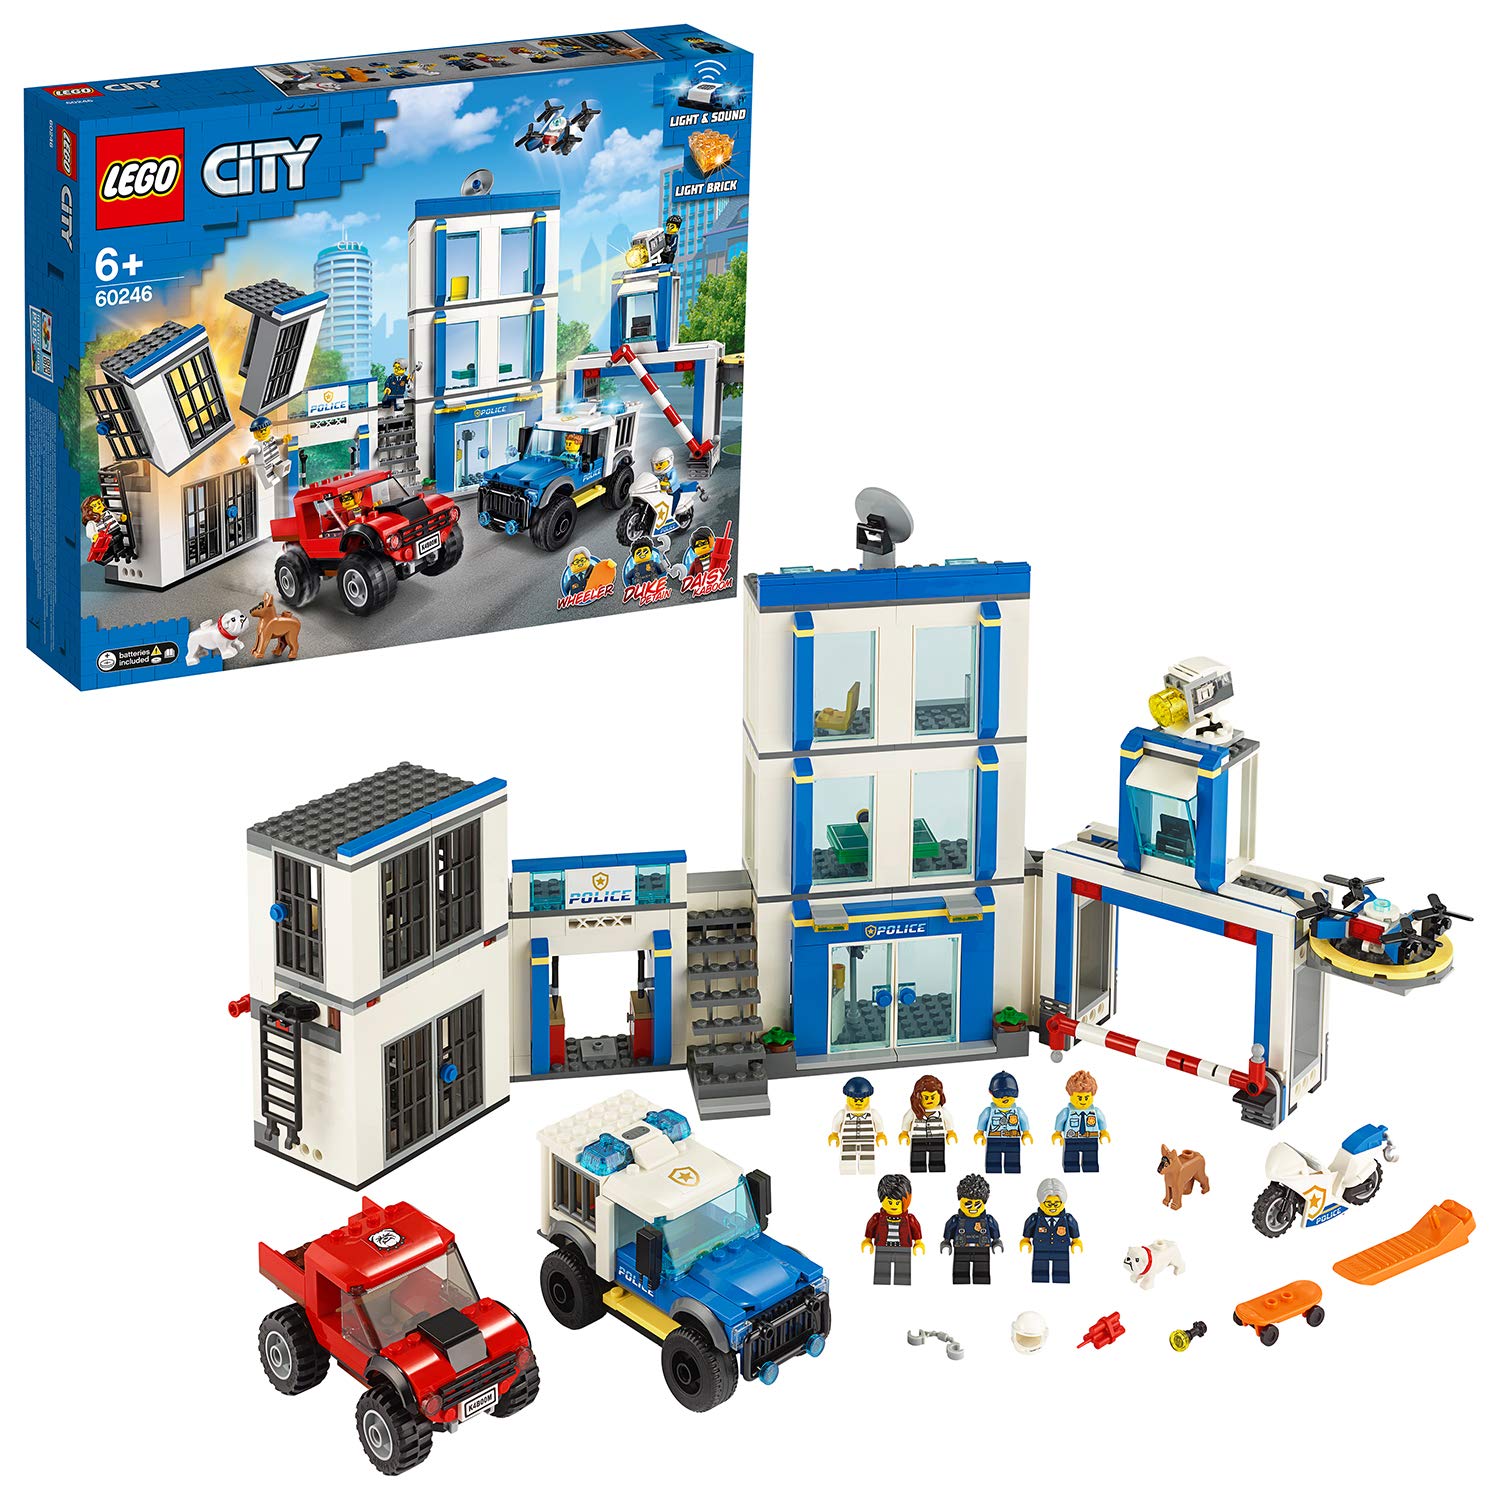 Lego 60246 Police Station City Construction Kit